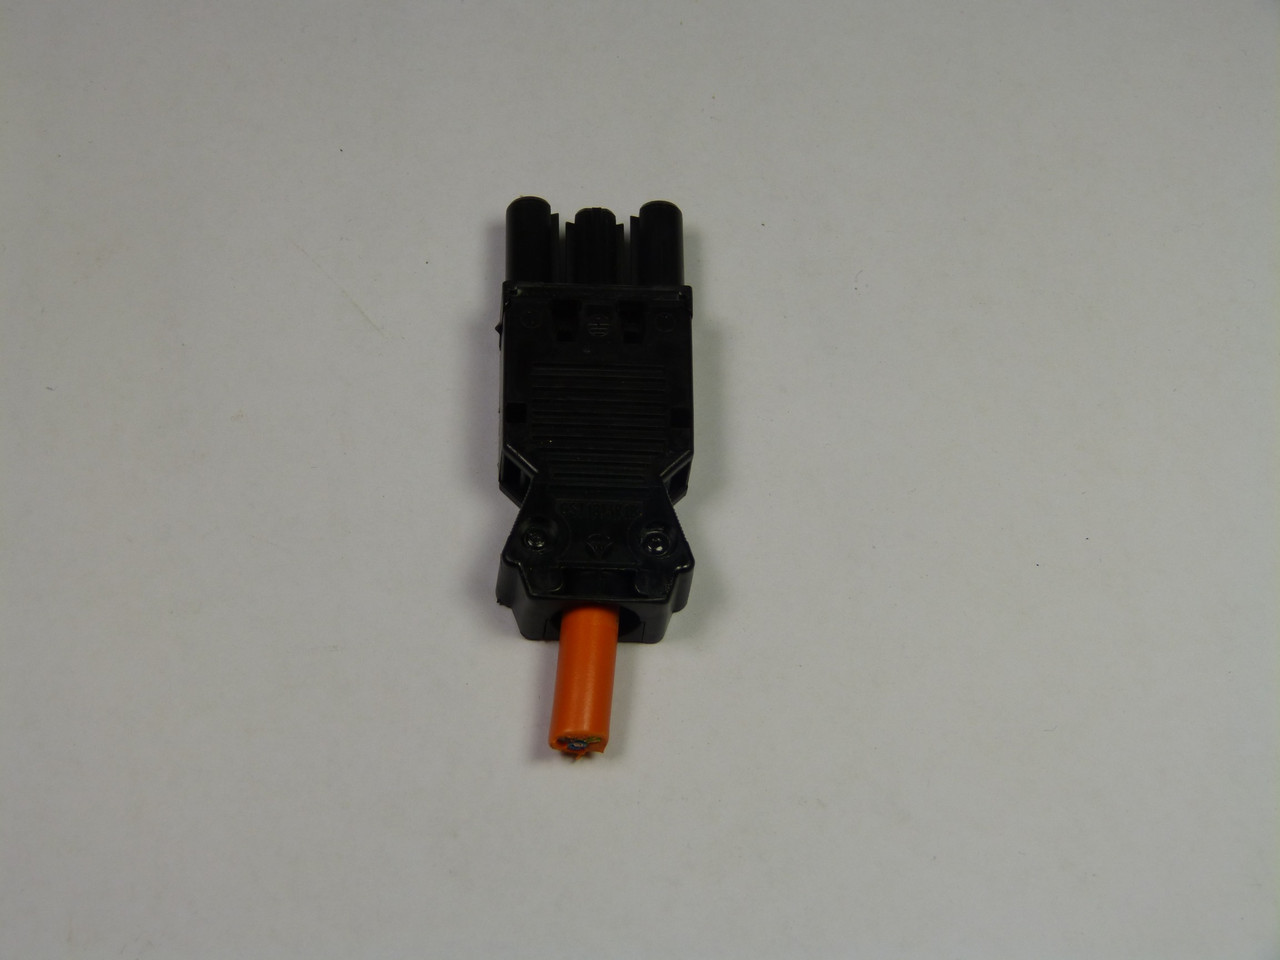 Weiland GST18I3K1B Connector W/ Strain Relief Black 250 Vac Female USED